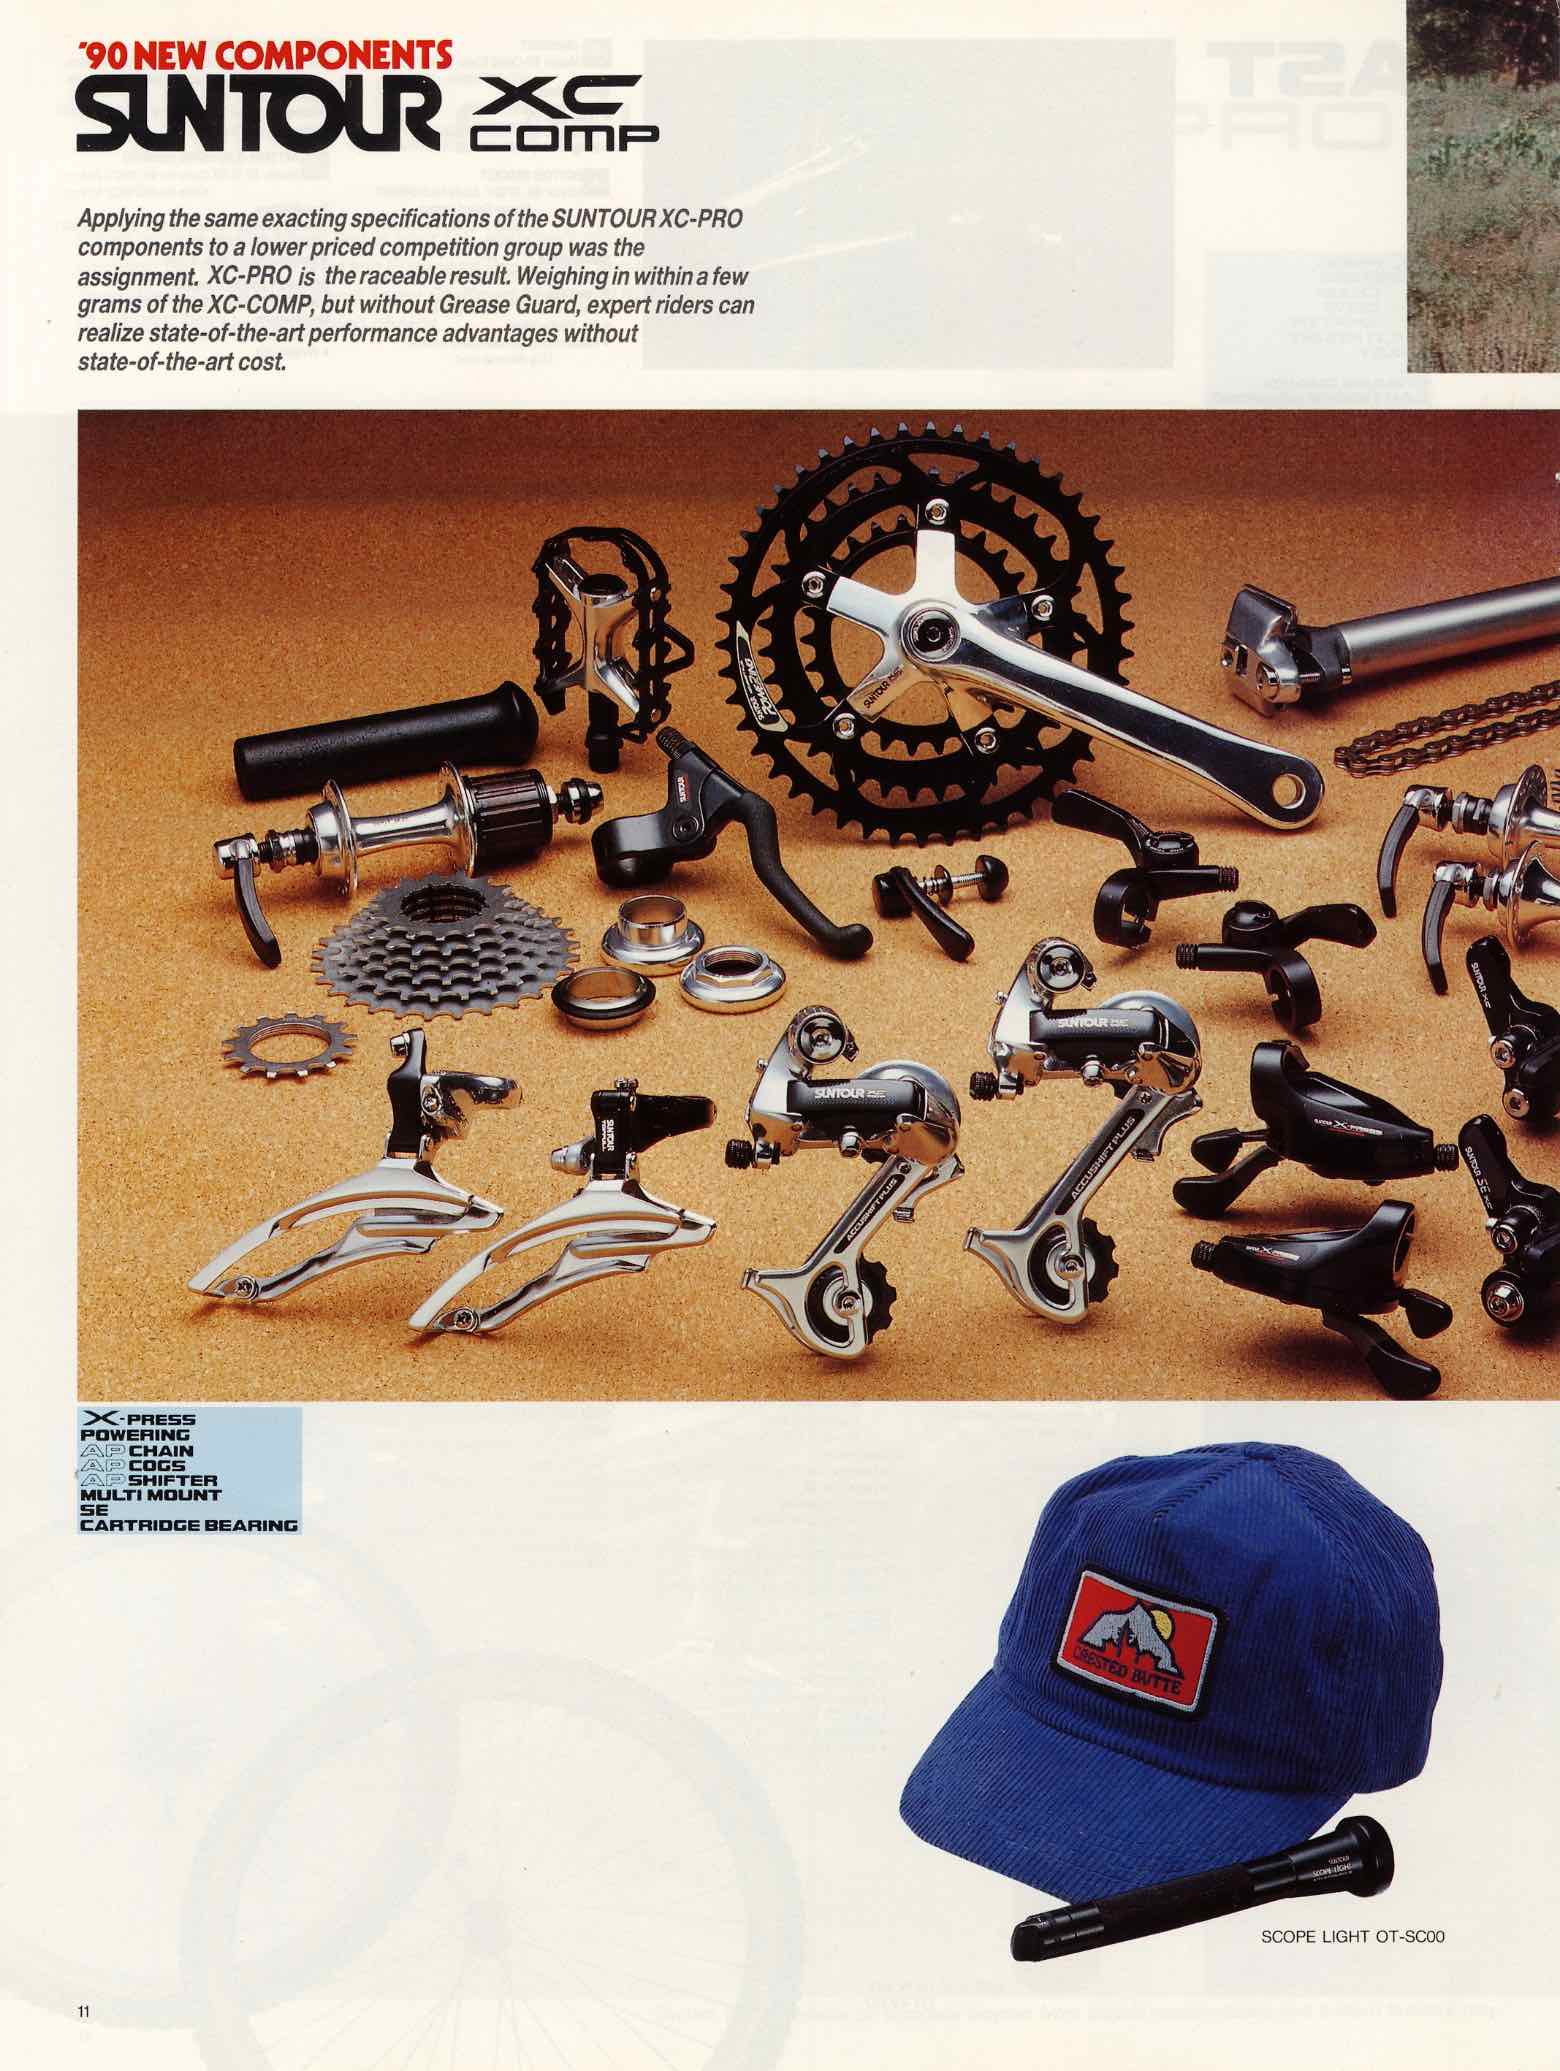 SunTour Bicycle Equipment Catalog 1990 - Page 11 main image